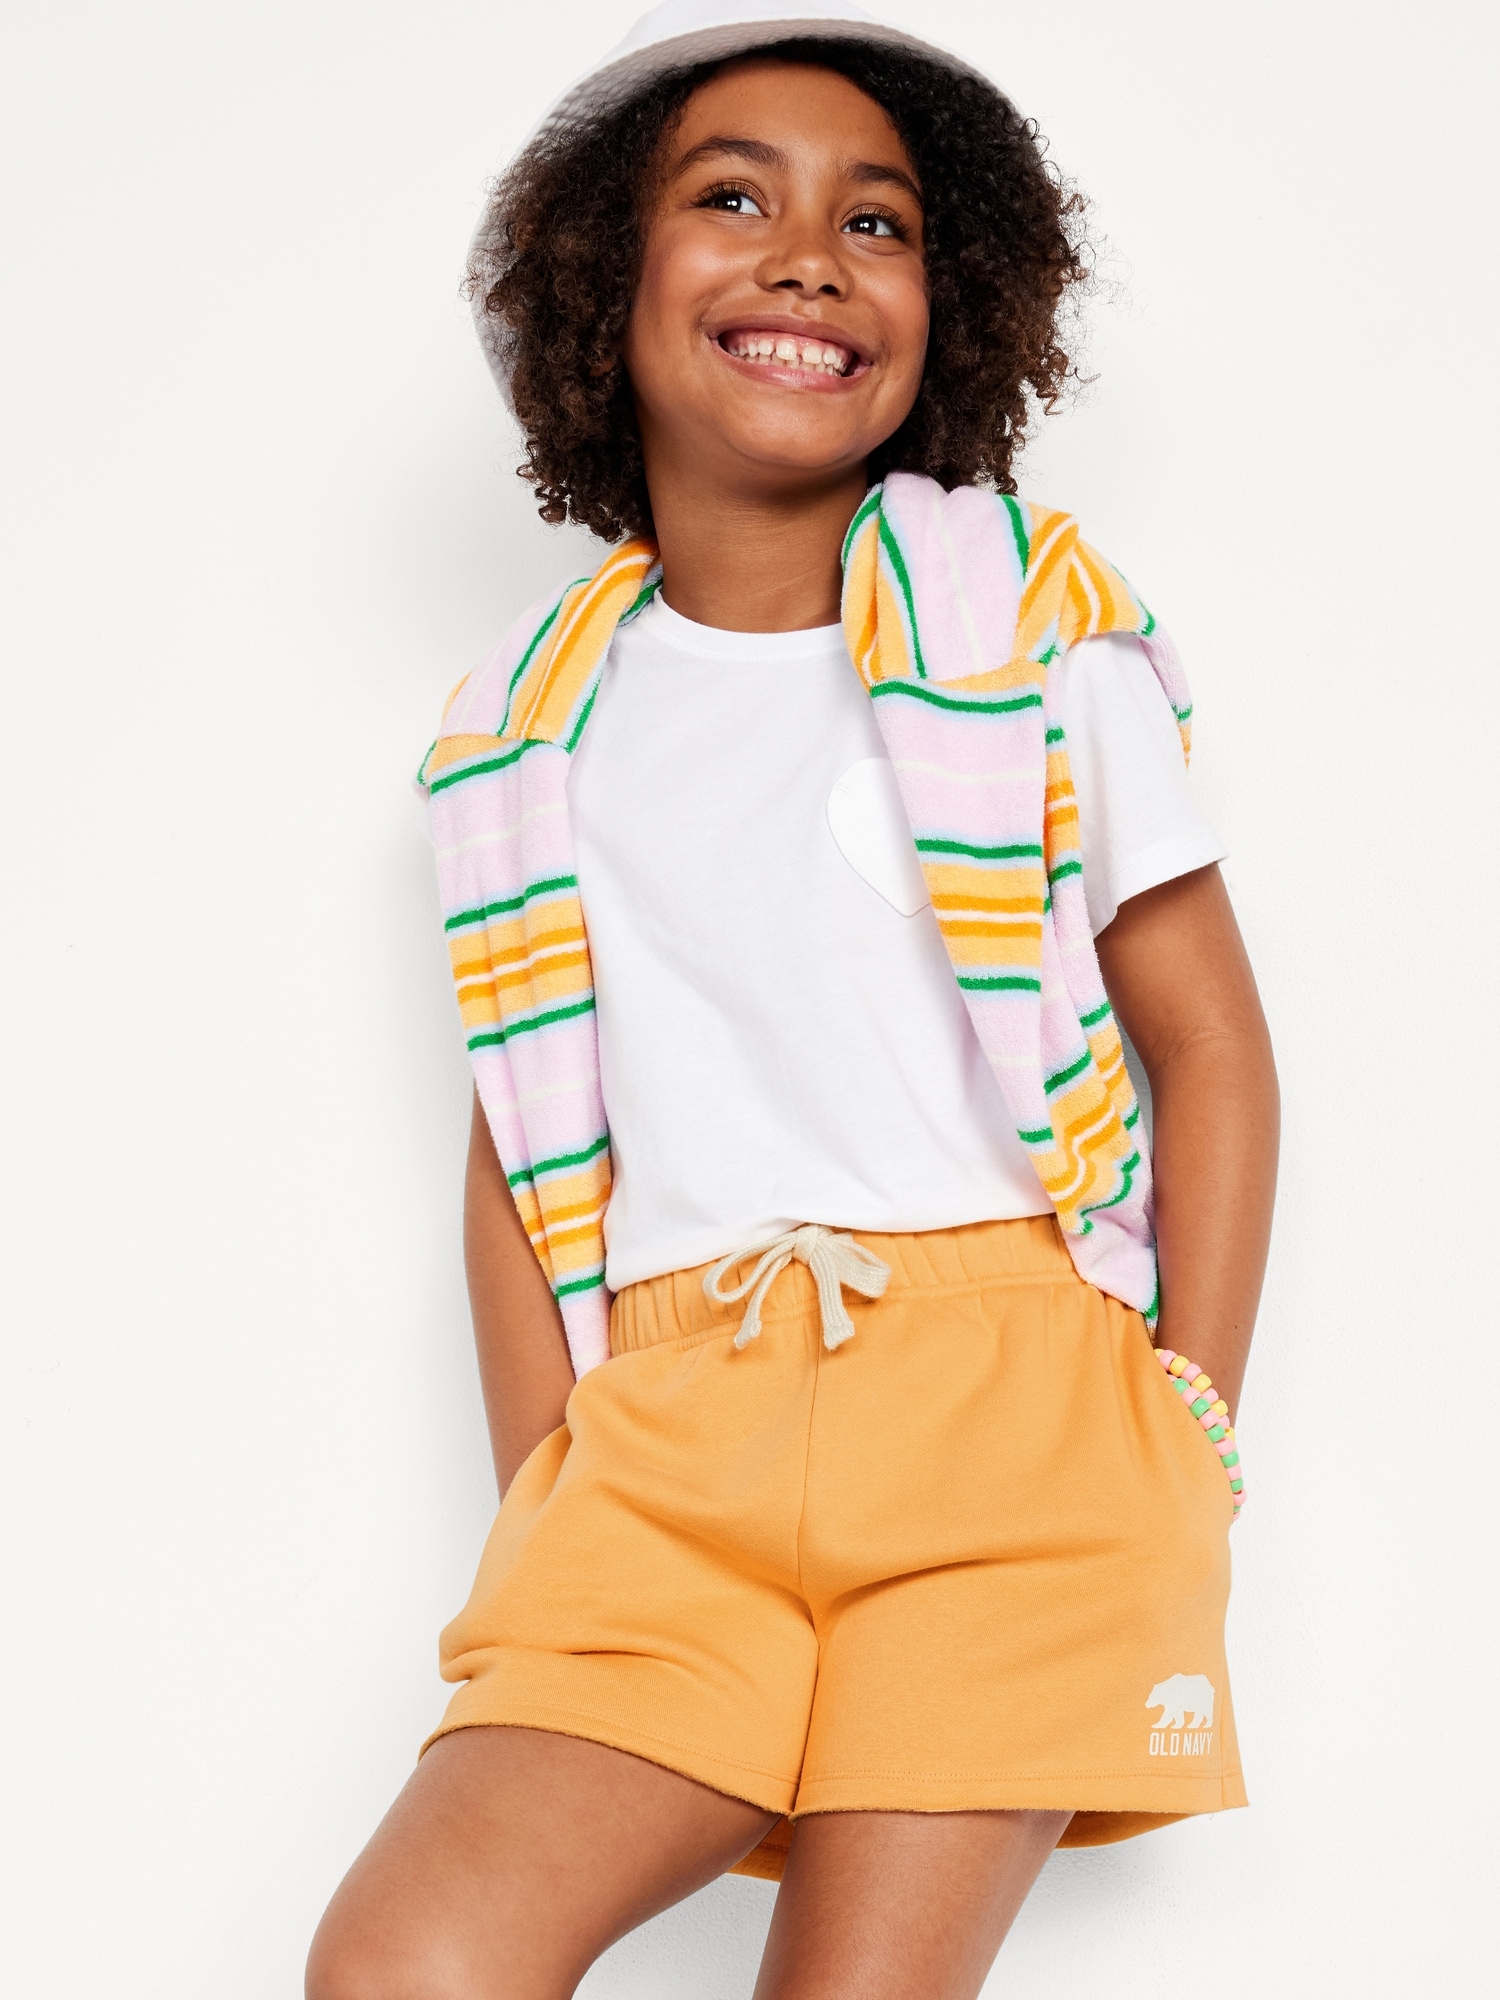 Off-White Kids logo-print drawstring shorts - Yellow